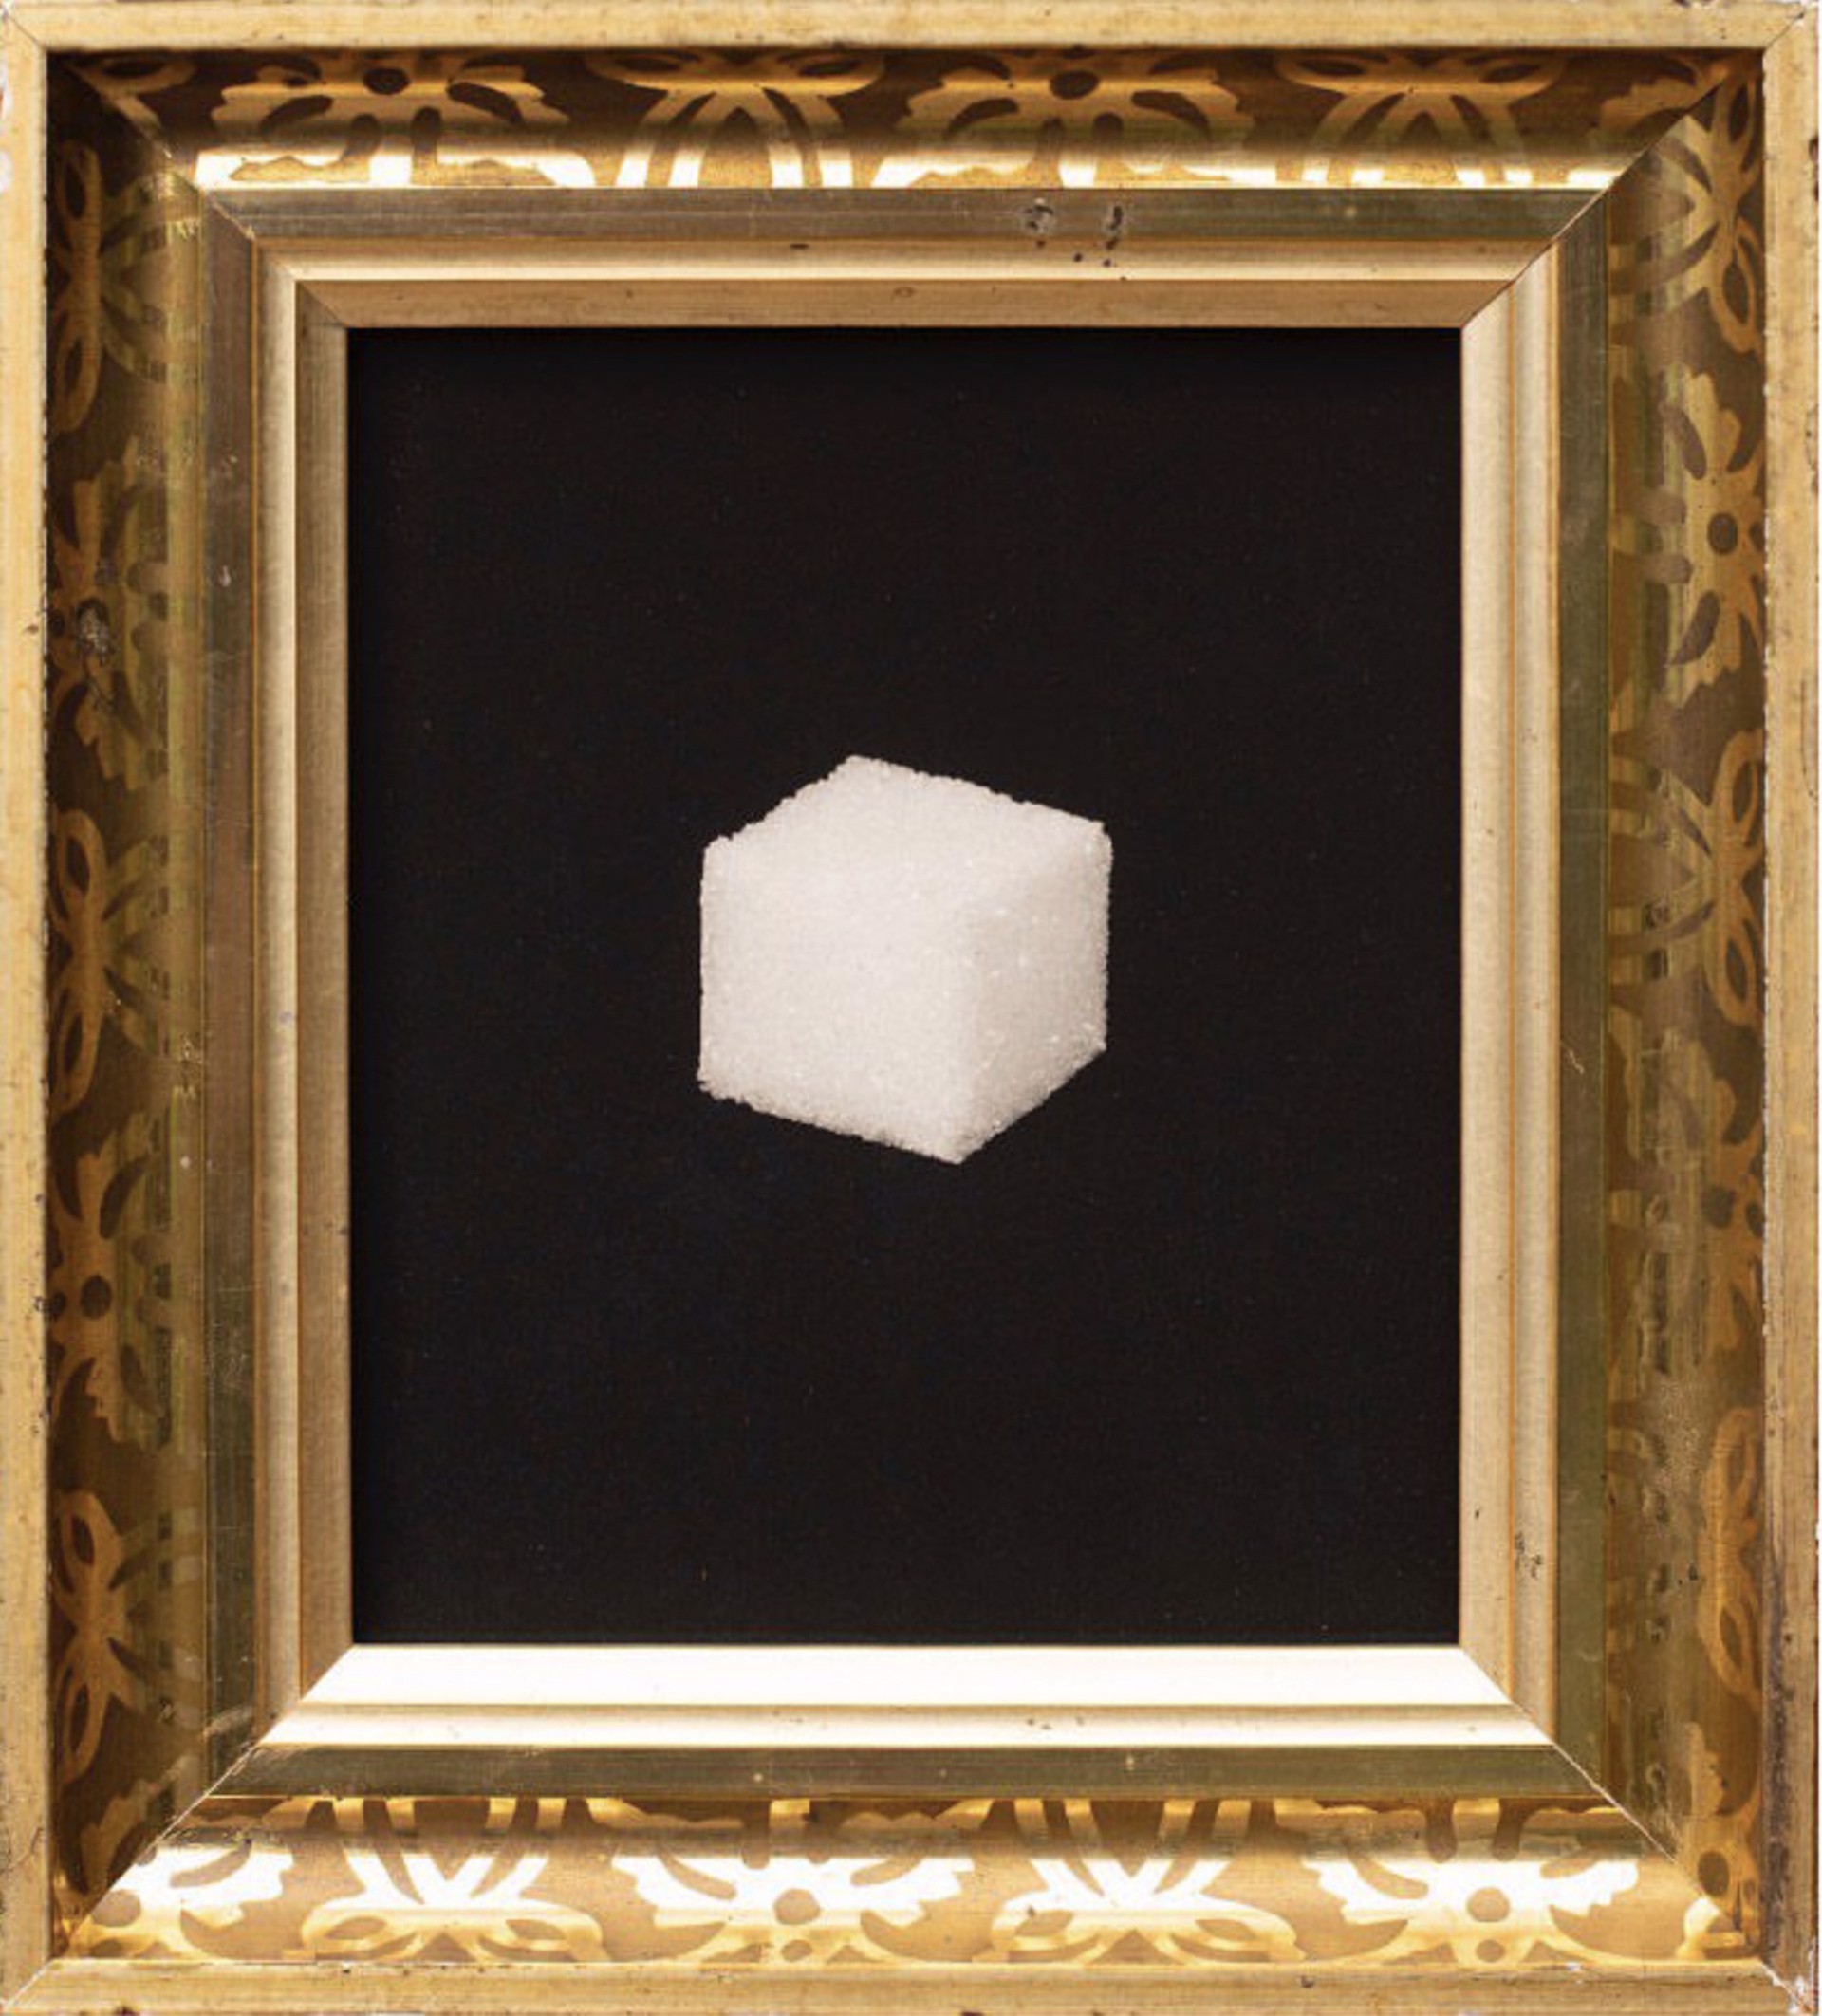 Sugar Cube by Jefferson Hayman